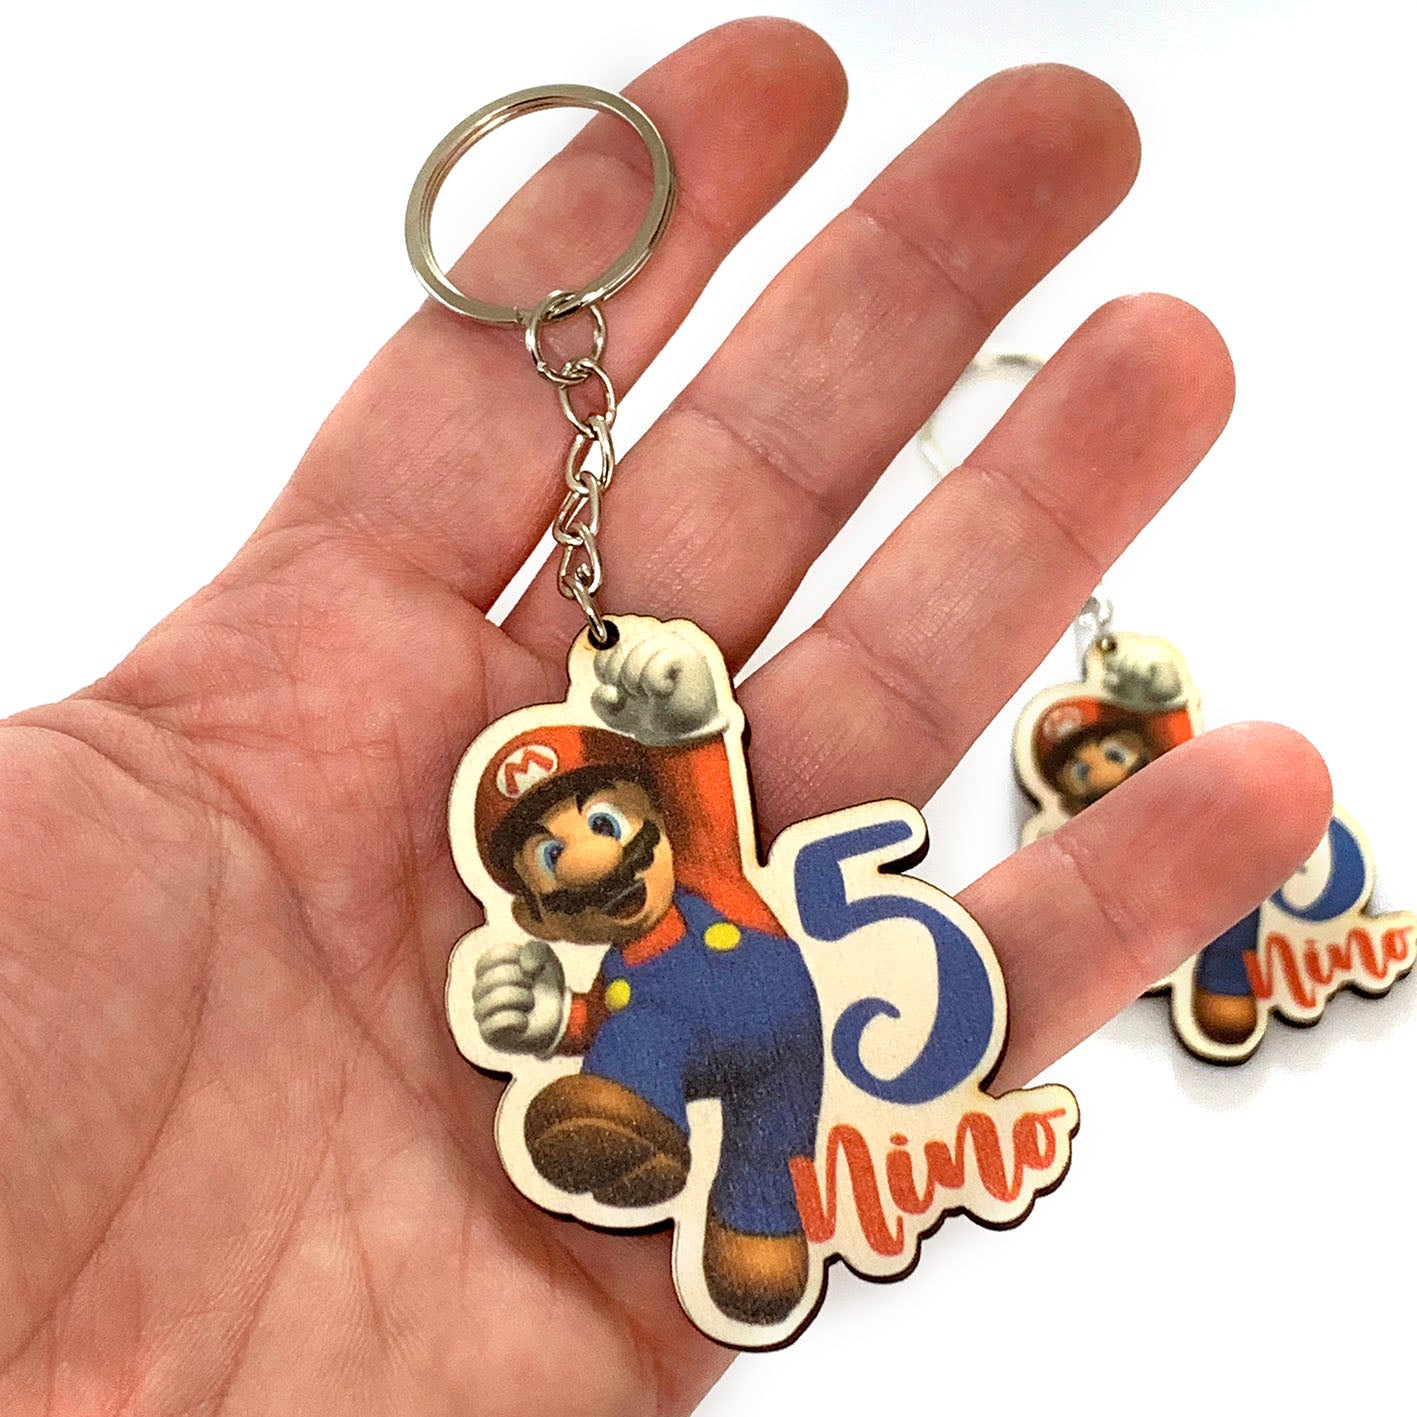 Super Mario key ring for child's birthday / Favor idea 